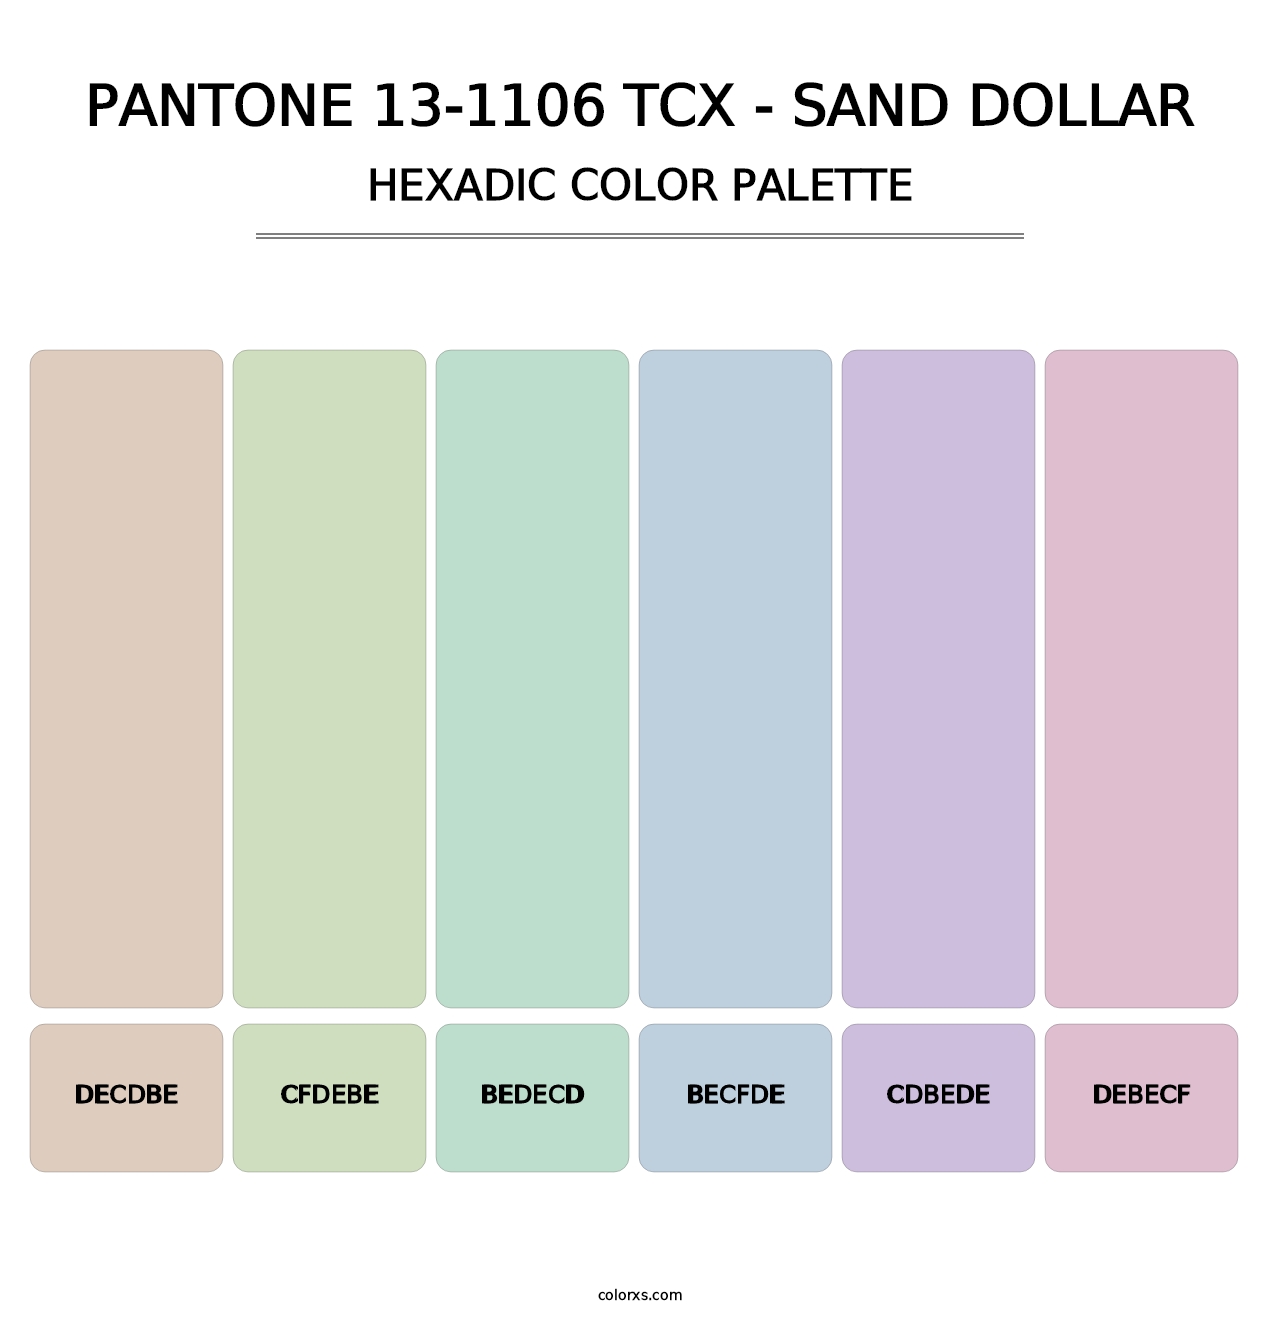 PANTONE 13-1106 TCX - Sand Dollar - Hexadic Color Palette